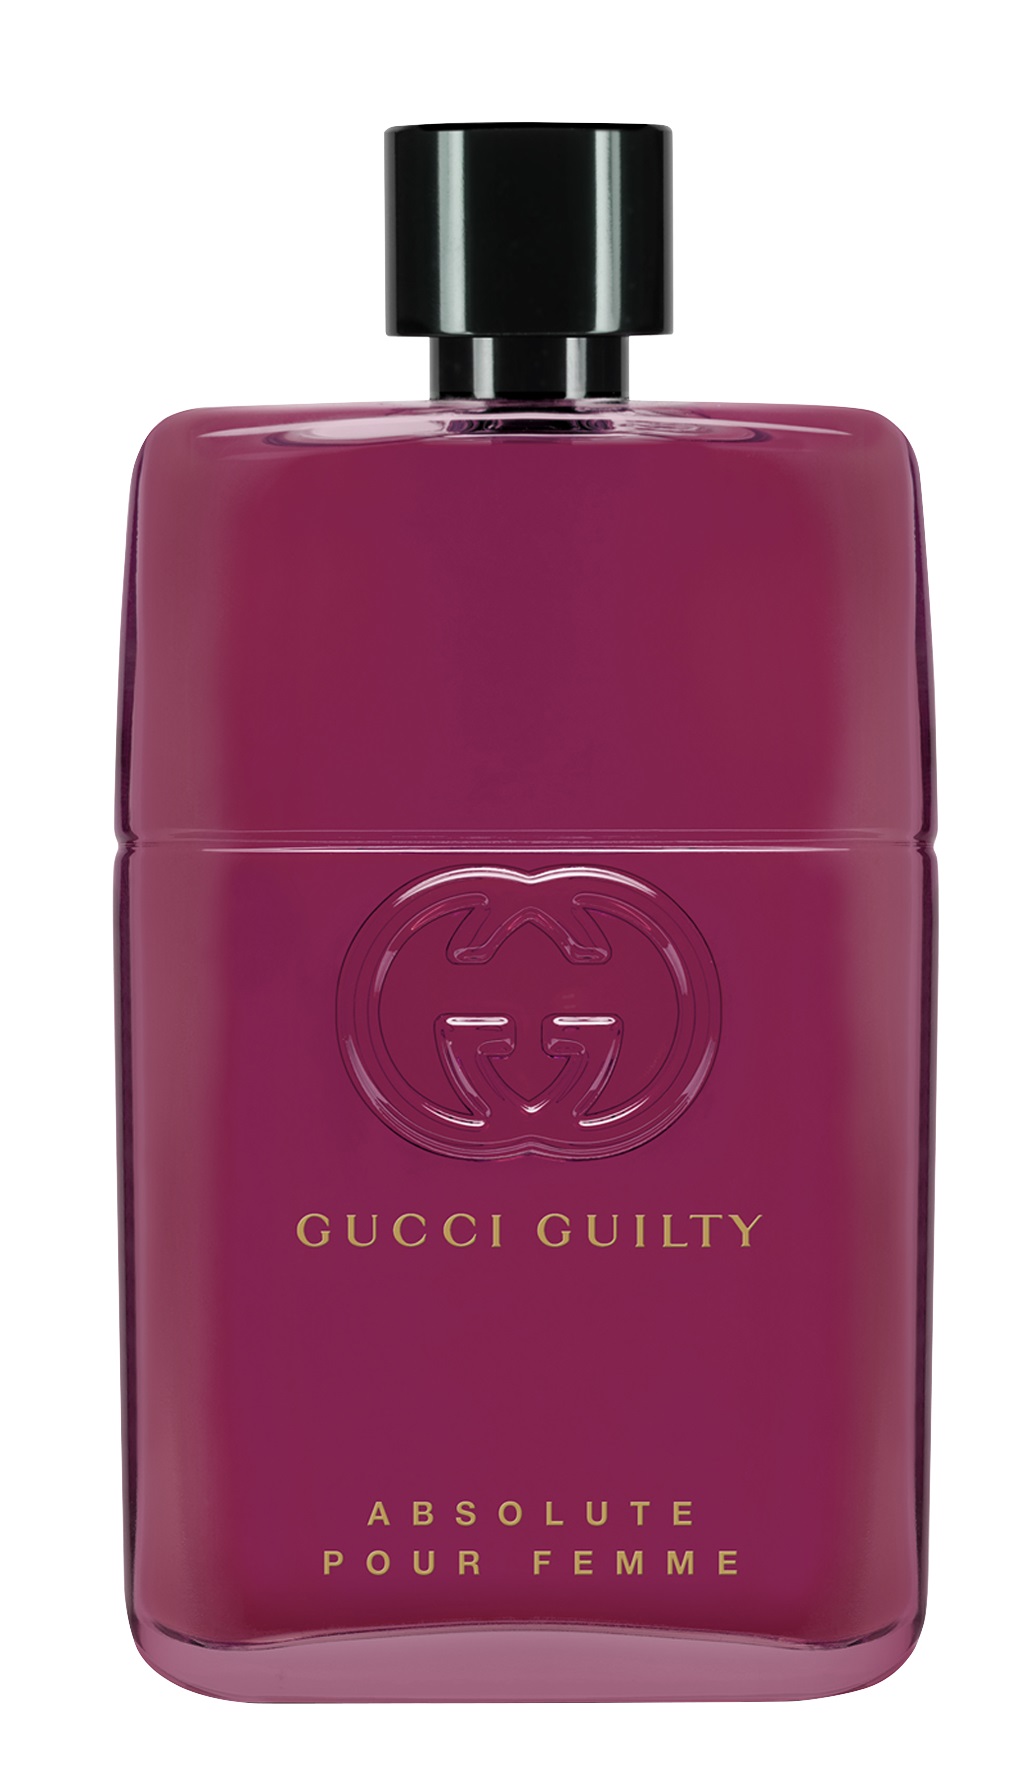 Gucci Guilty Absolute Pour Femme EdP 90 